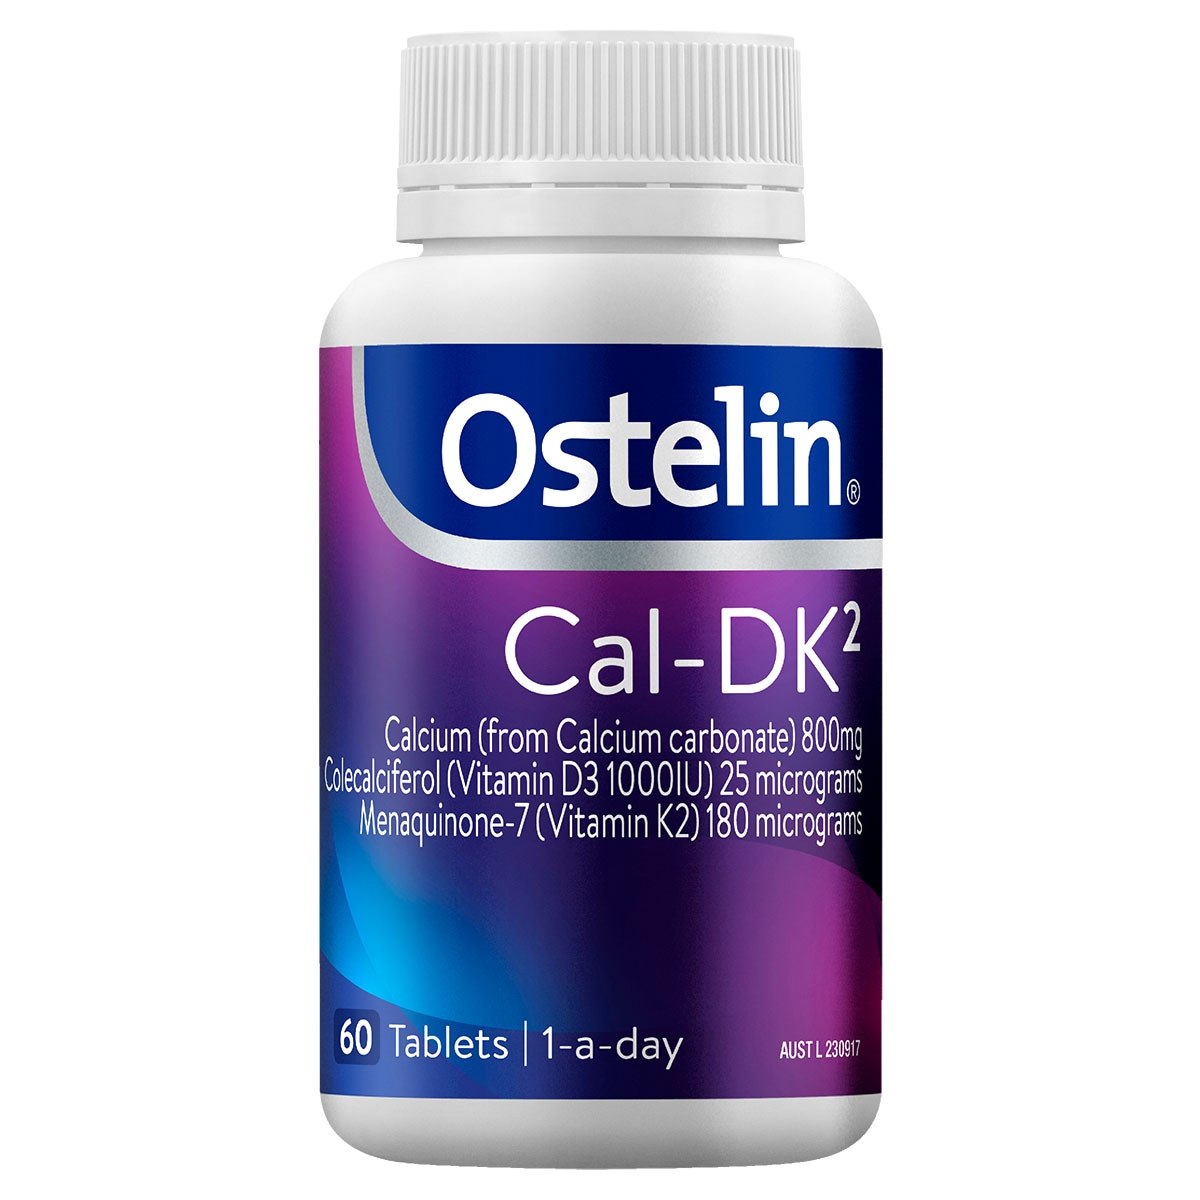 Ostelin Cal-Dk2 60 Tablets